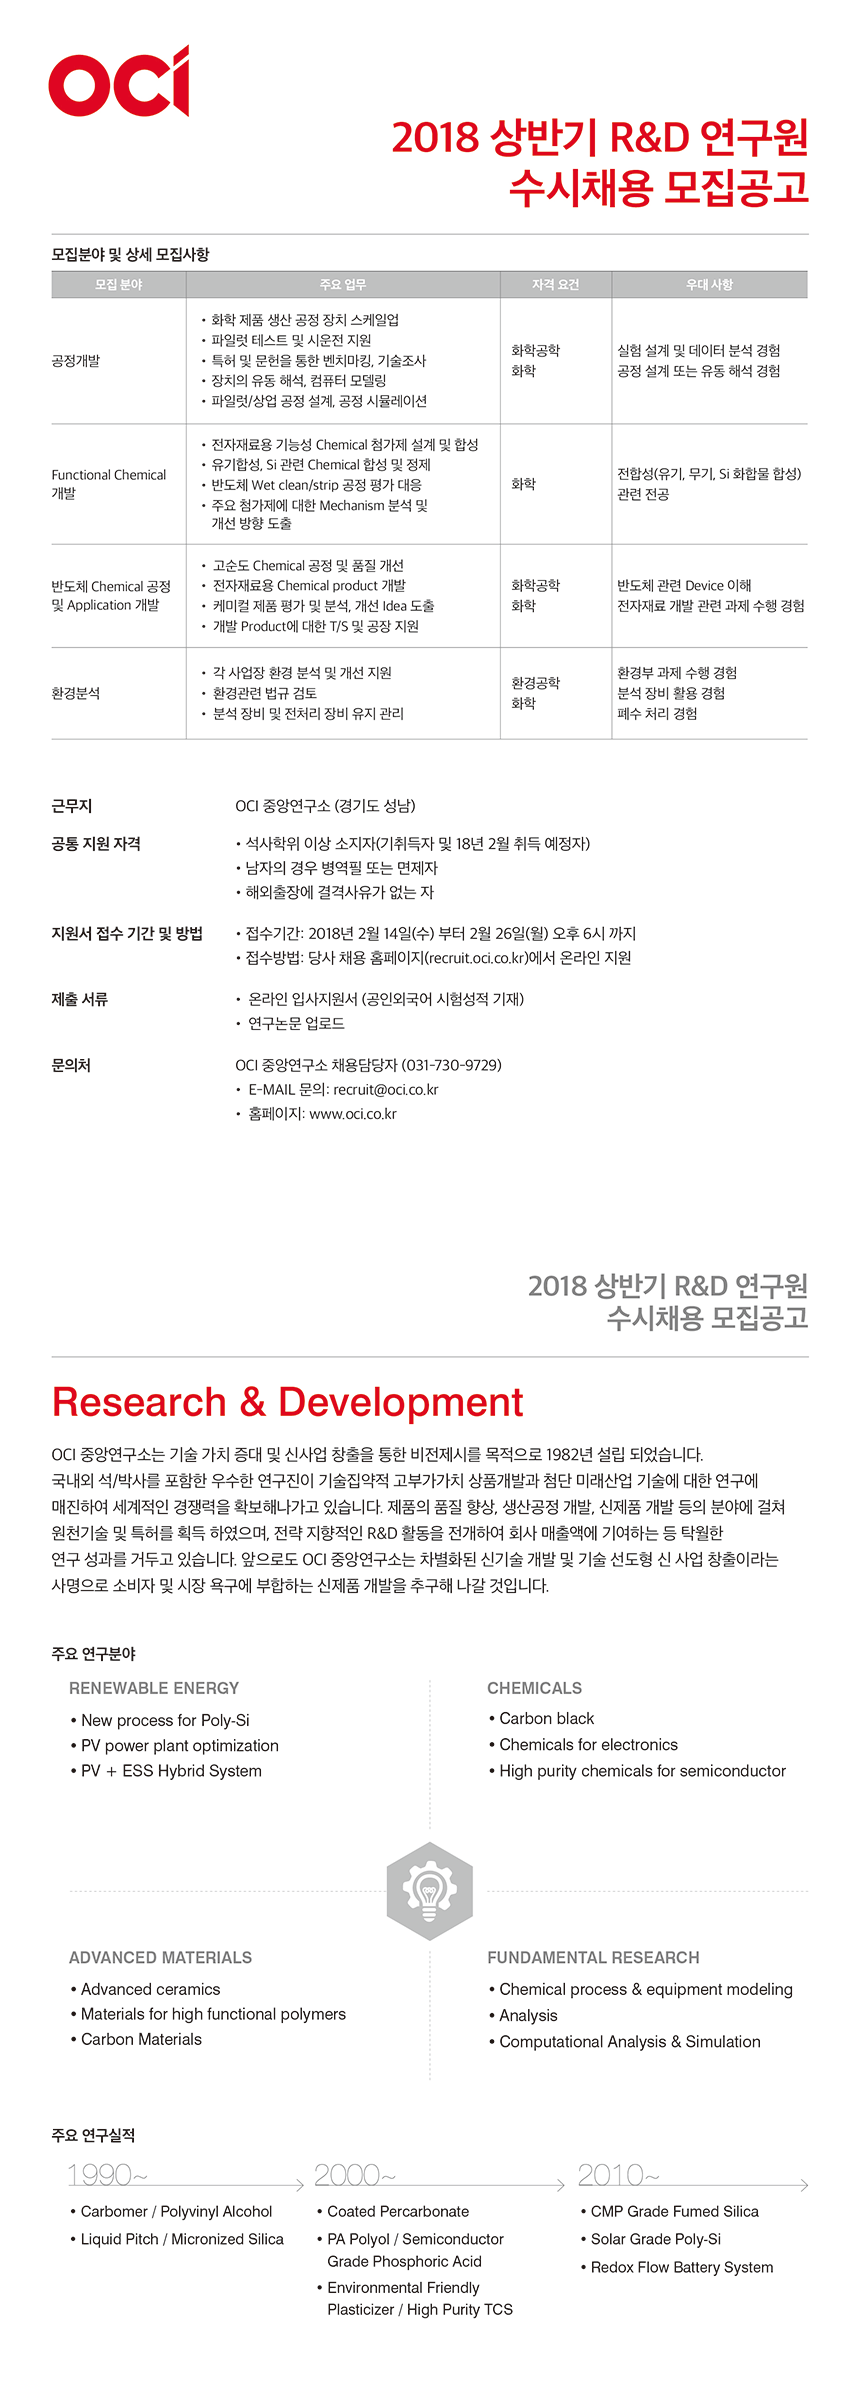 ㈜OCI 2018 상반기 R&D 연구원 수시채용